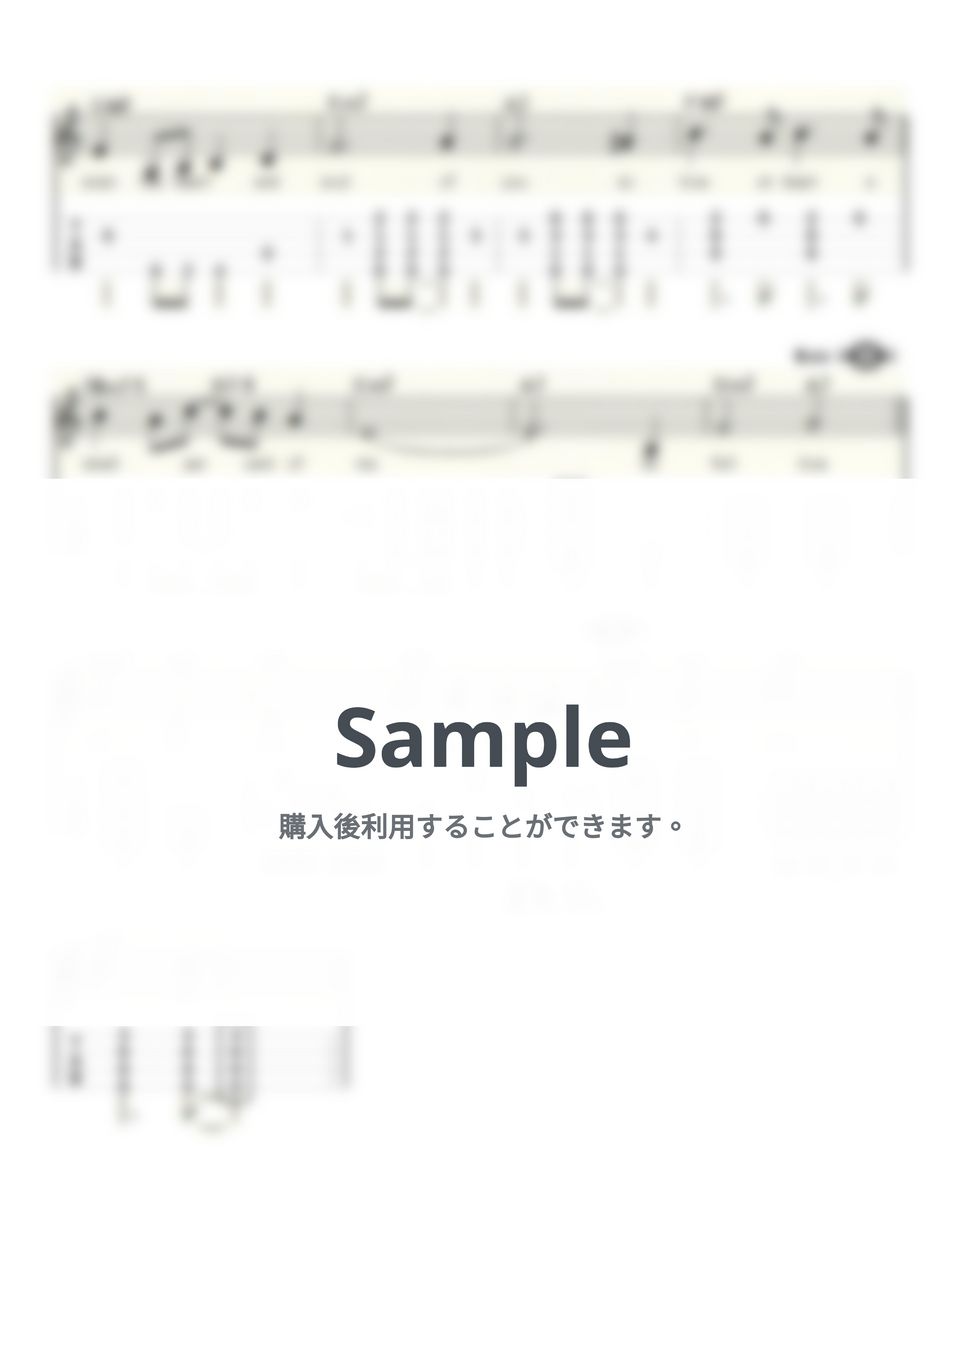 Cole Porter - All of You (ｳｸﾚﾚｿﾛ/Low-G/中級) by ukulelepapa